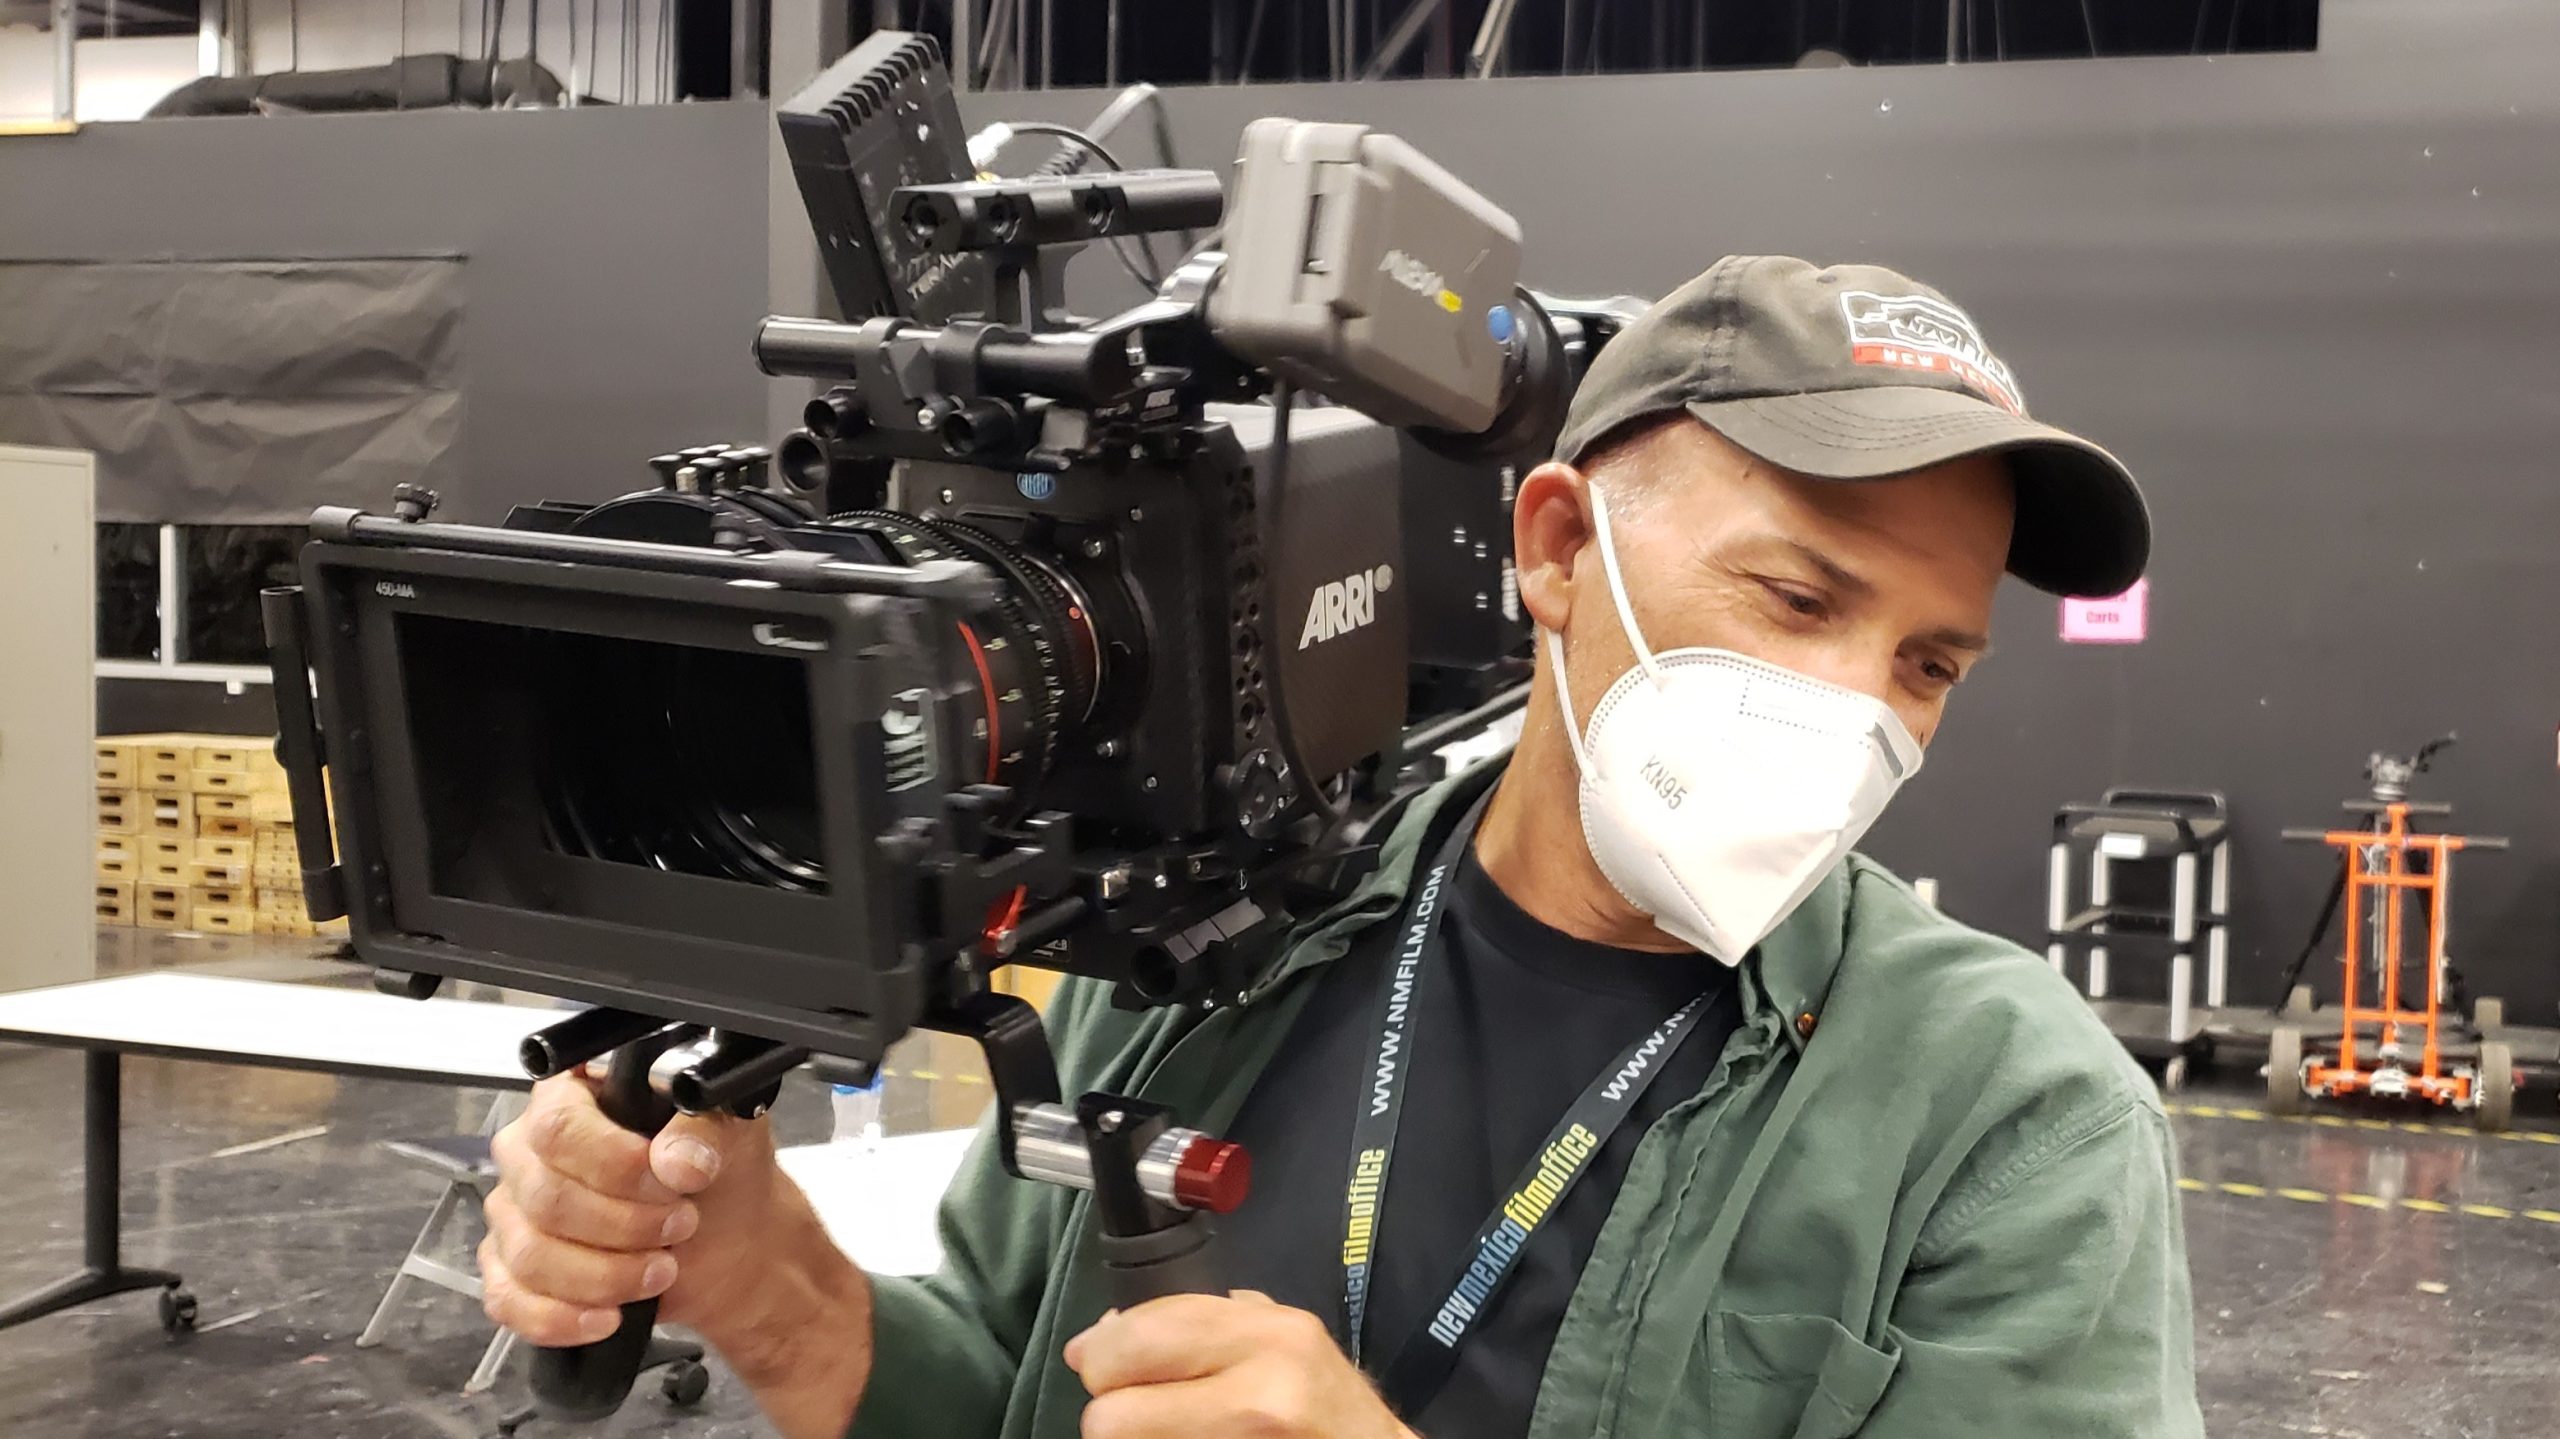 Carlos Vilkerman on set working with the Arri Alexa Mini camera